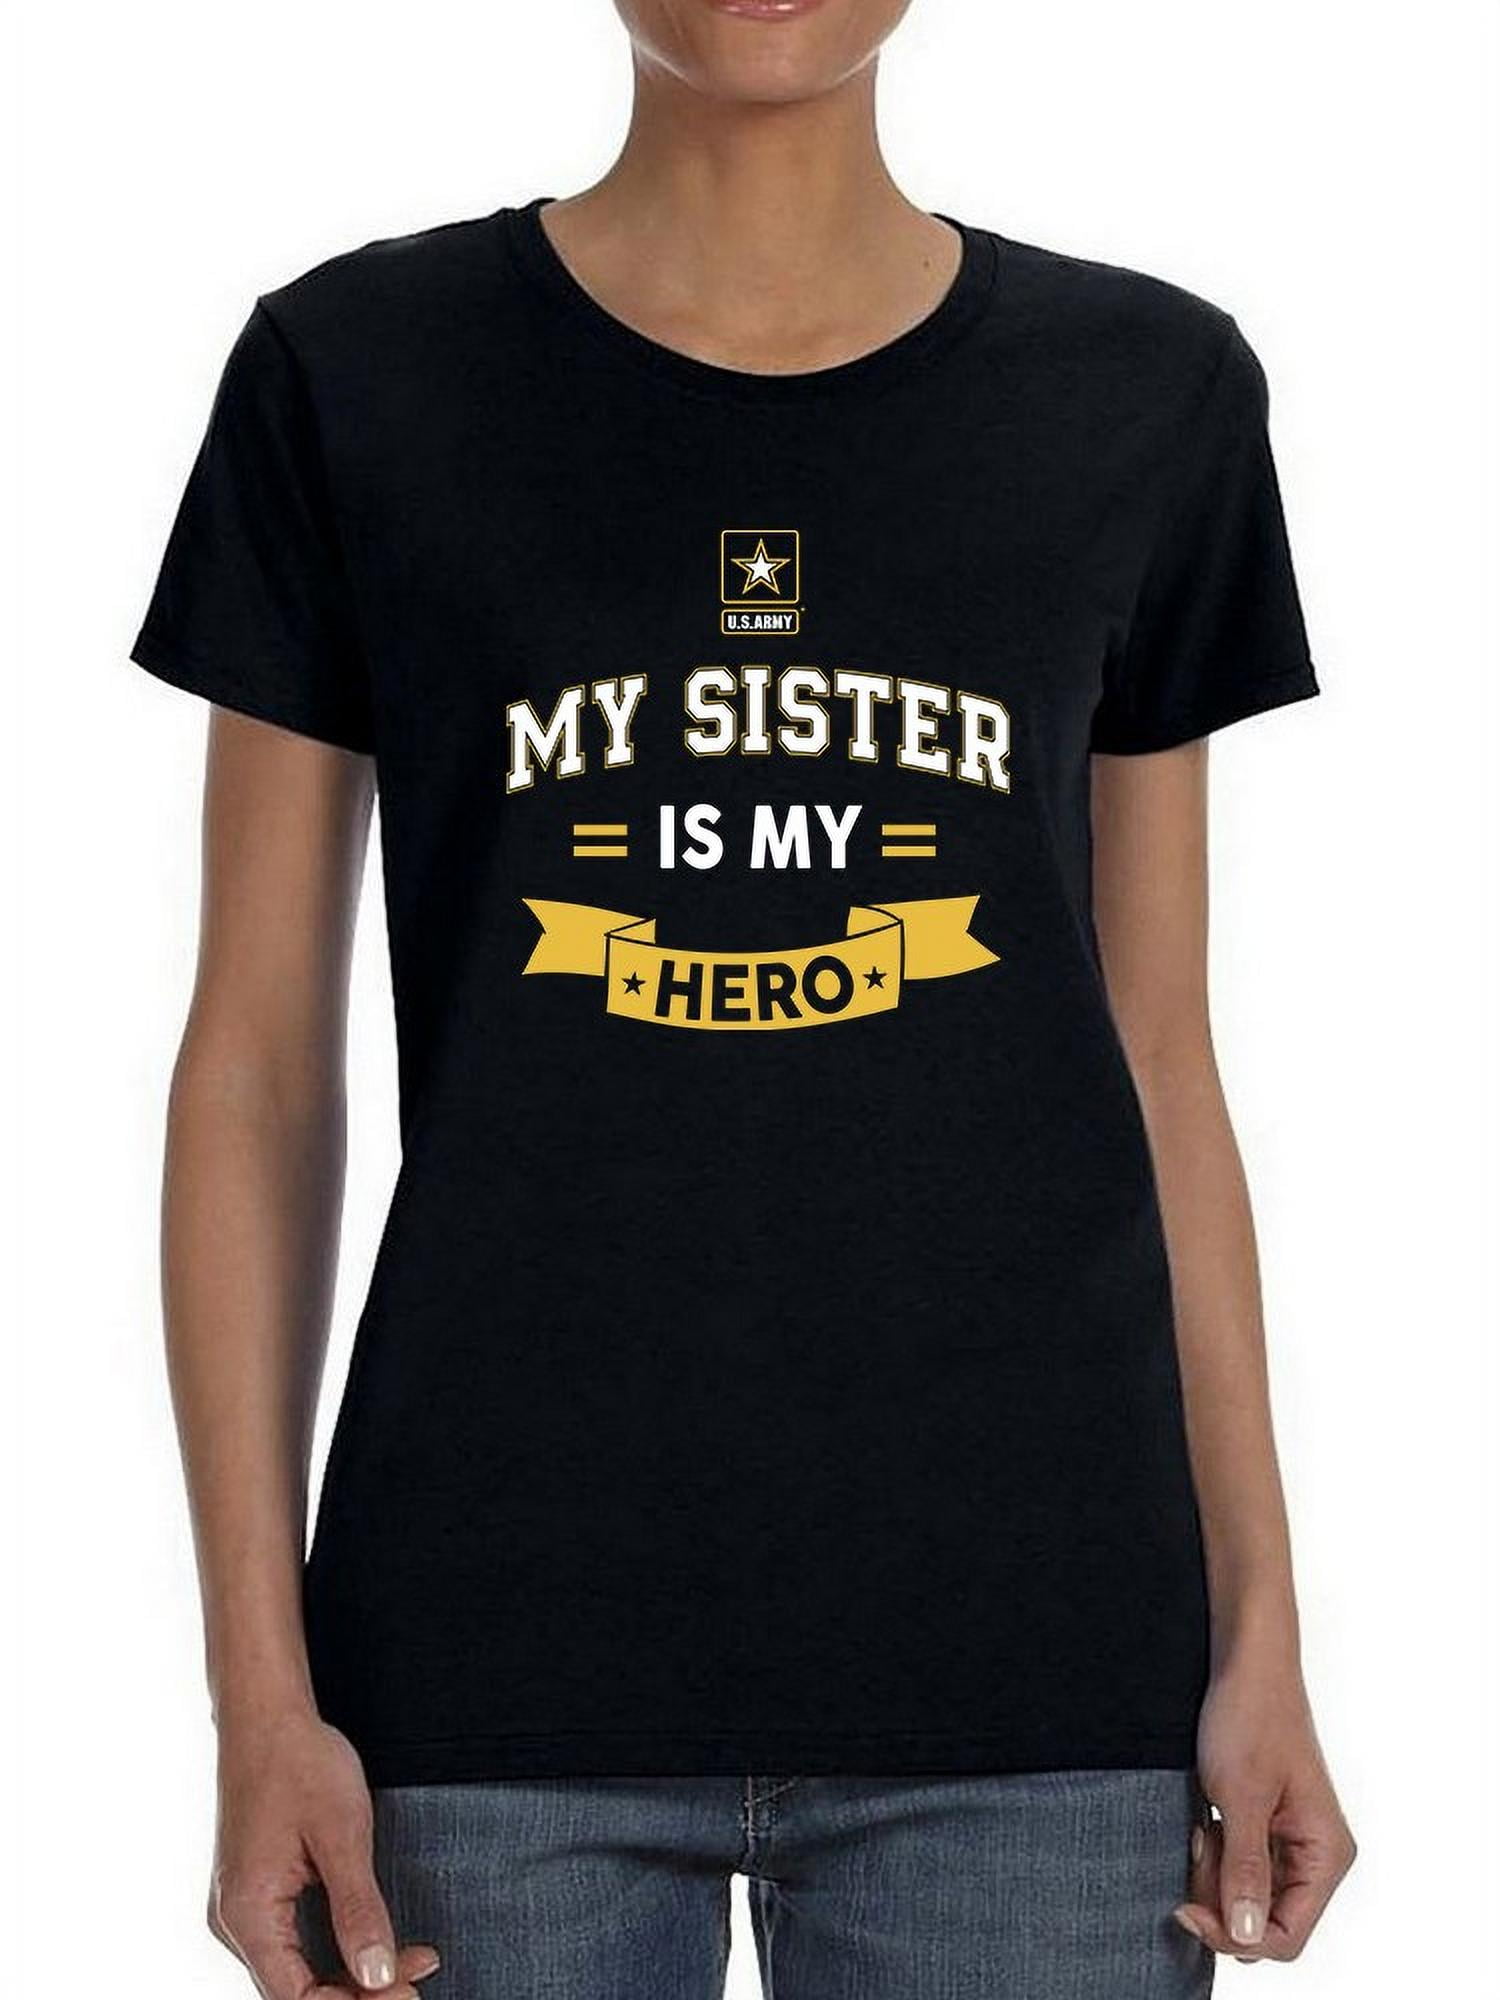 My Sister Is My Hero Shaped T-Shirt Women -Army Designs, Female Small Walmart.com